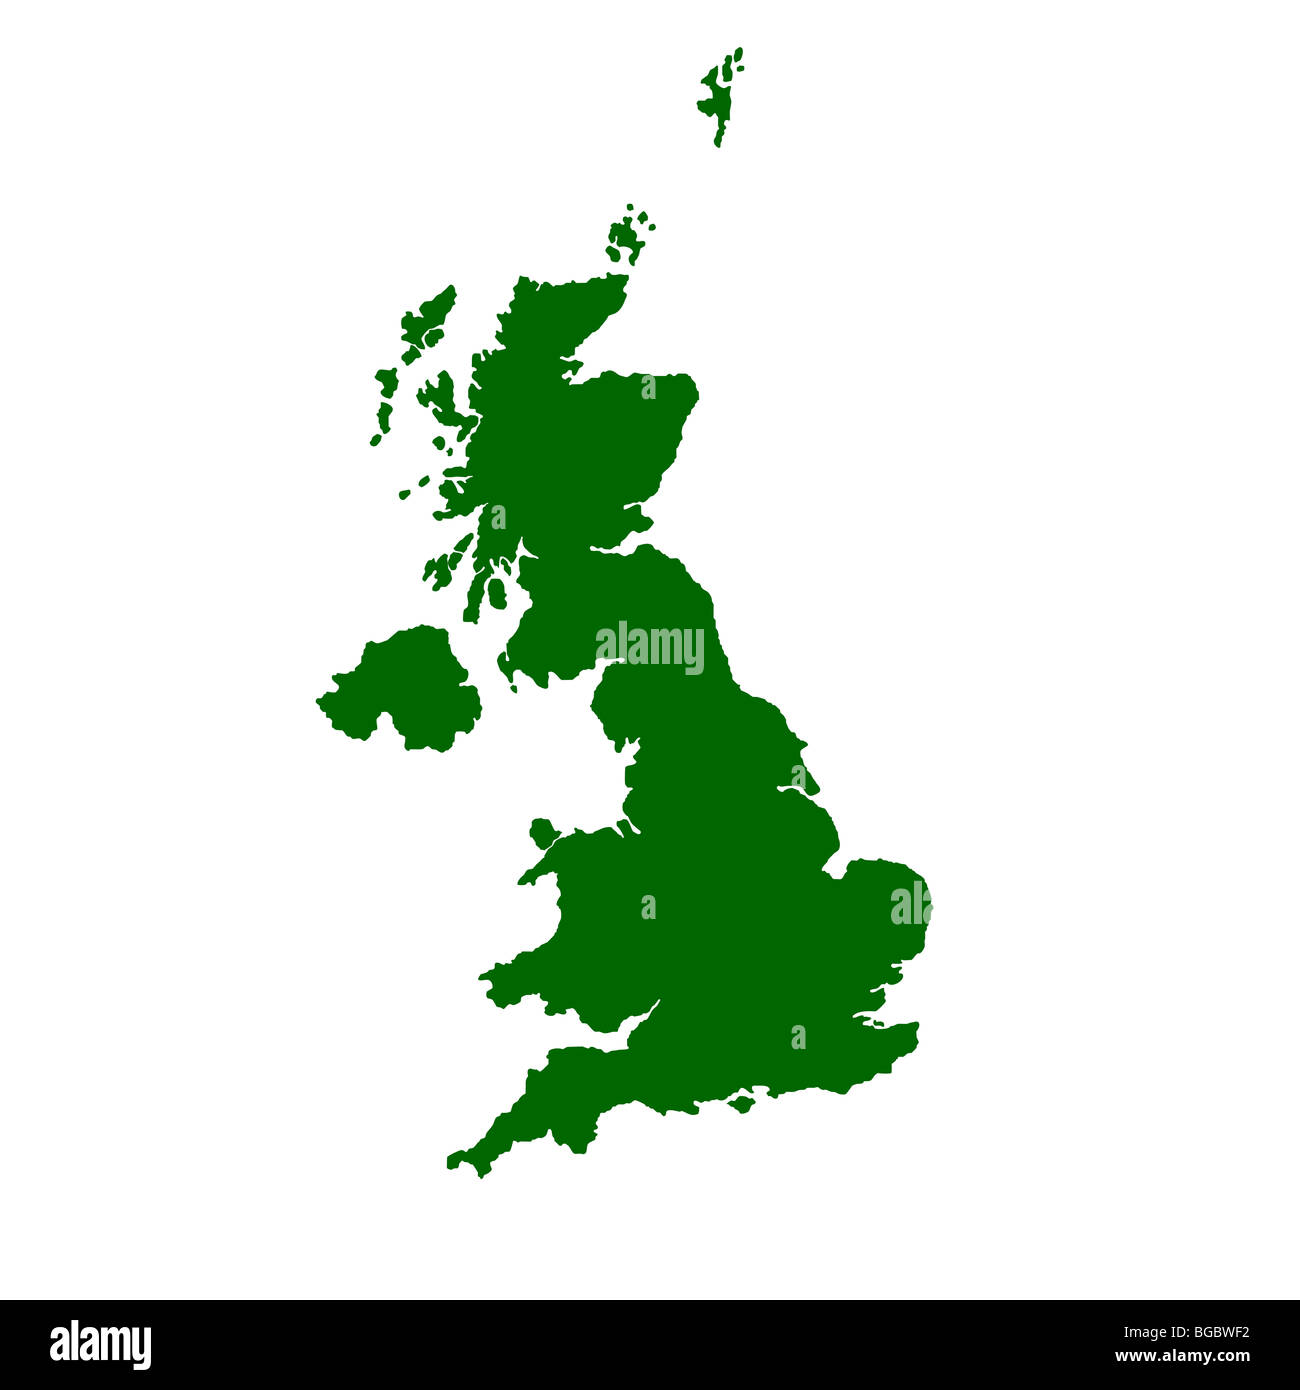 Isolated map of United Kingdom of England, Scotland, Wales and Northern Ireland. Stock Photo